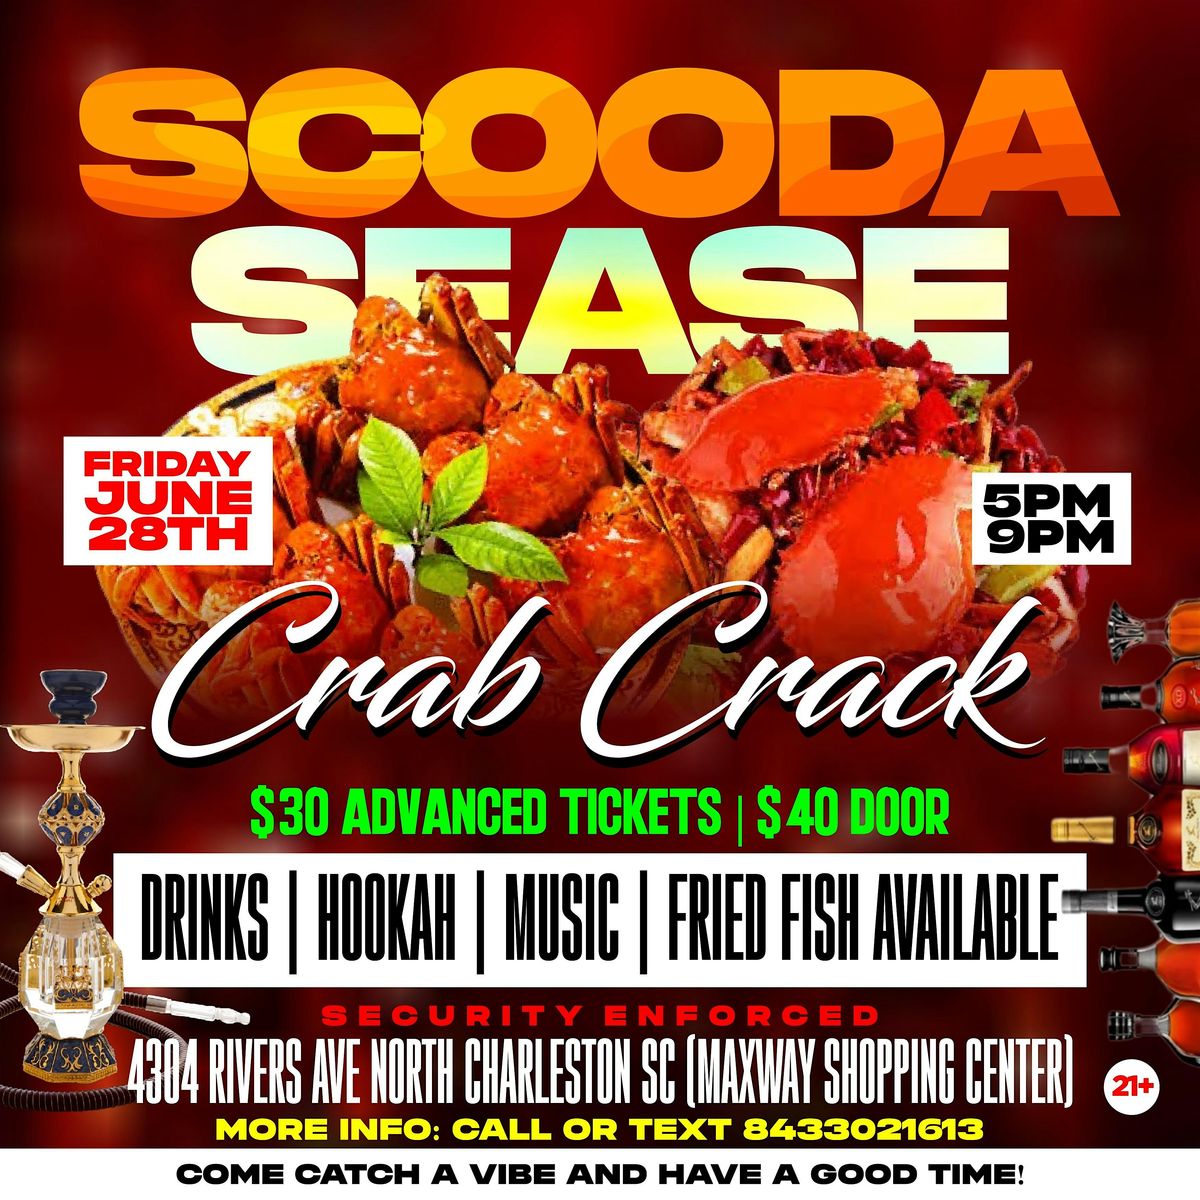 Scooda Sease Crab Crack